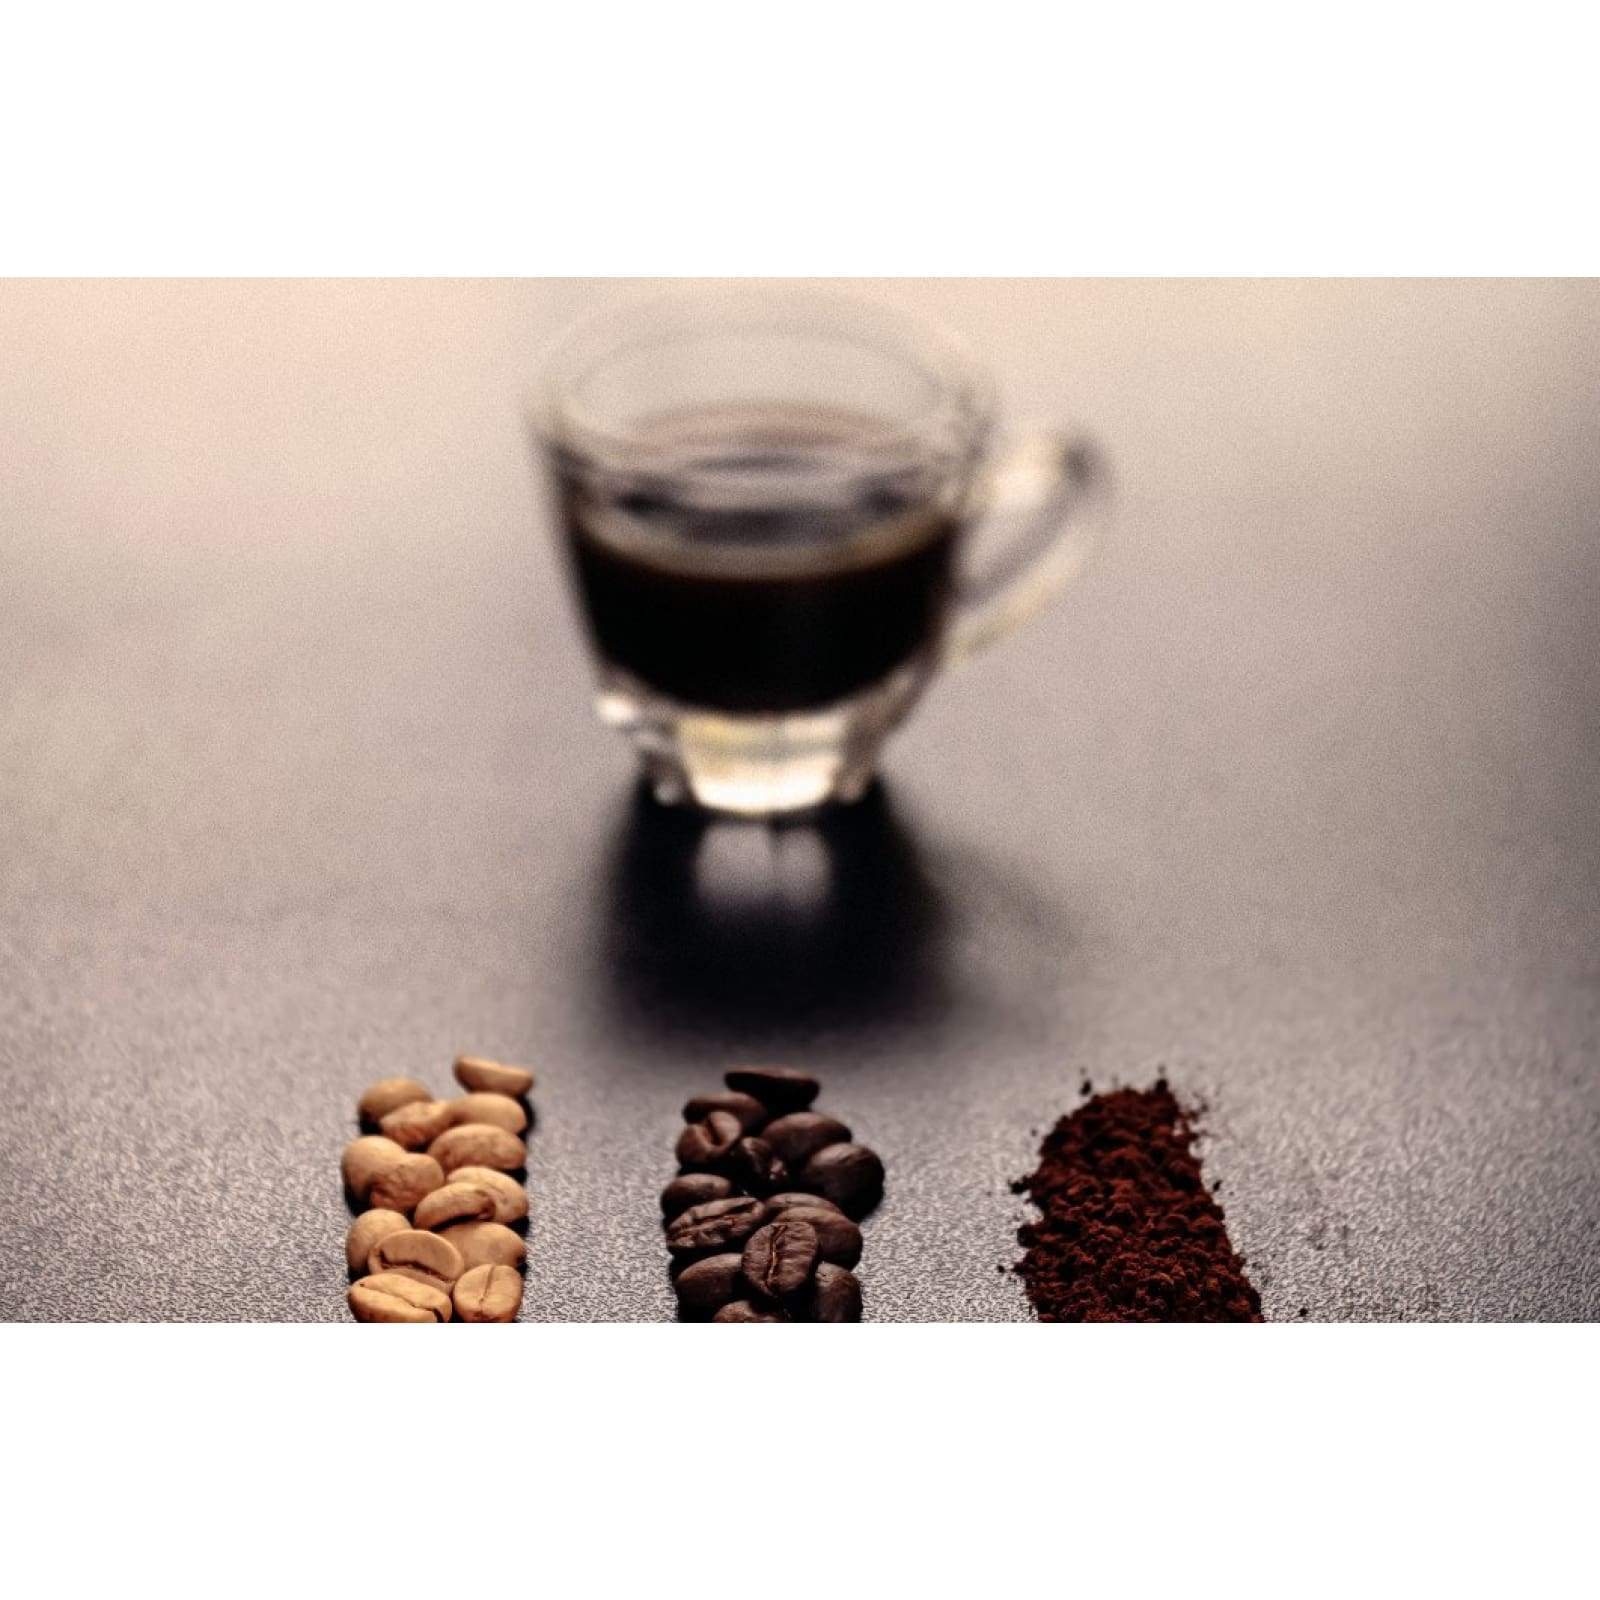 Caffeine Is Life Blend - 12oz / Premium (Drip) - Coffee - $15.00